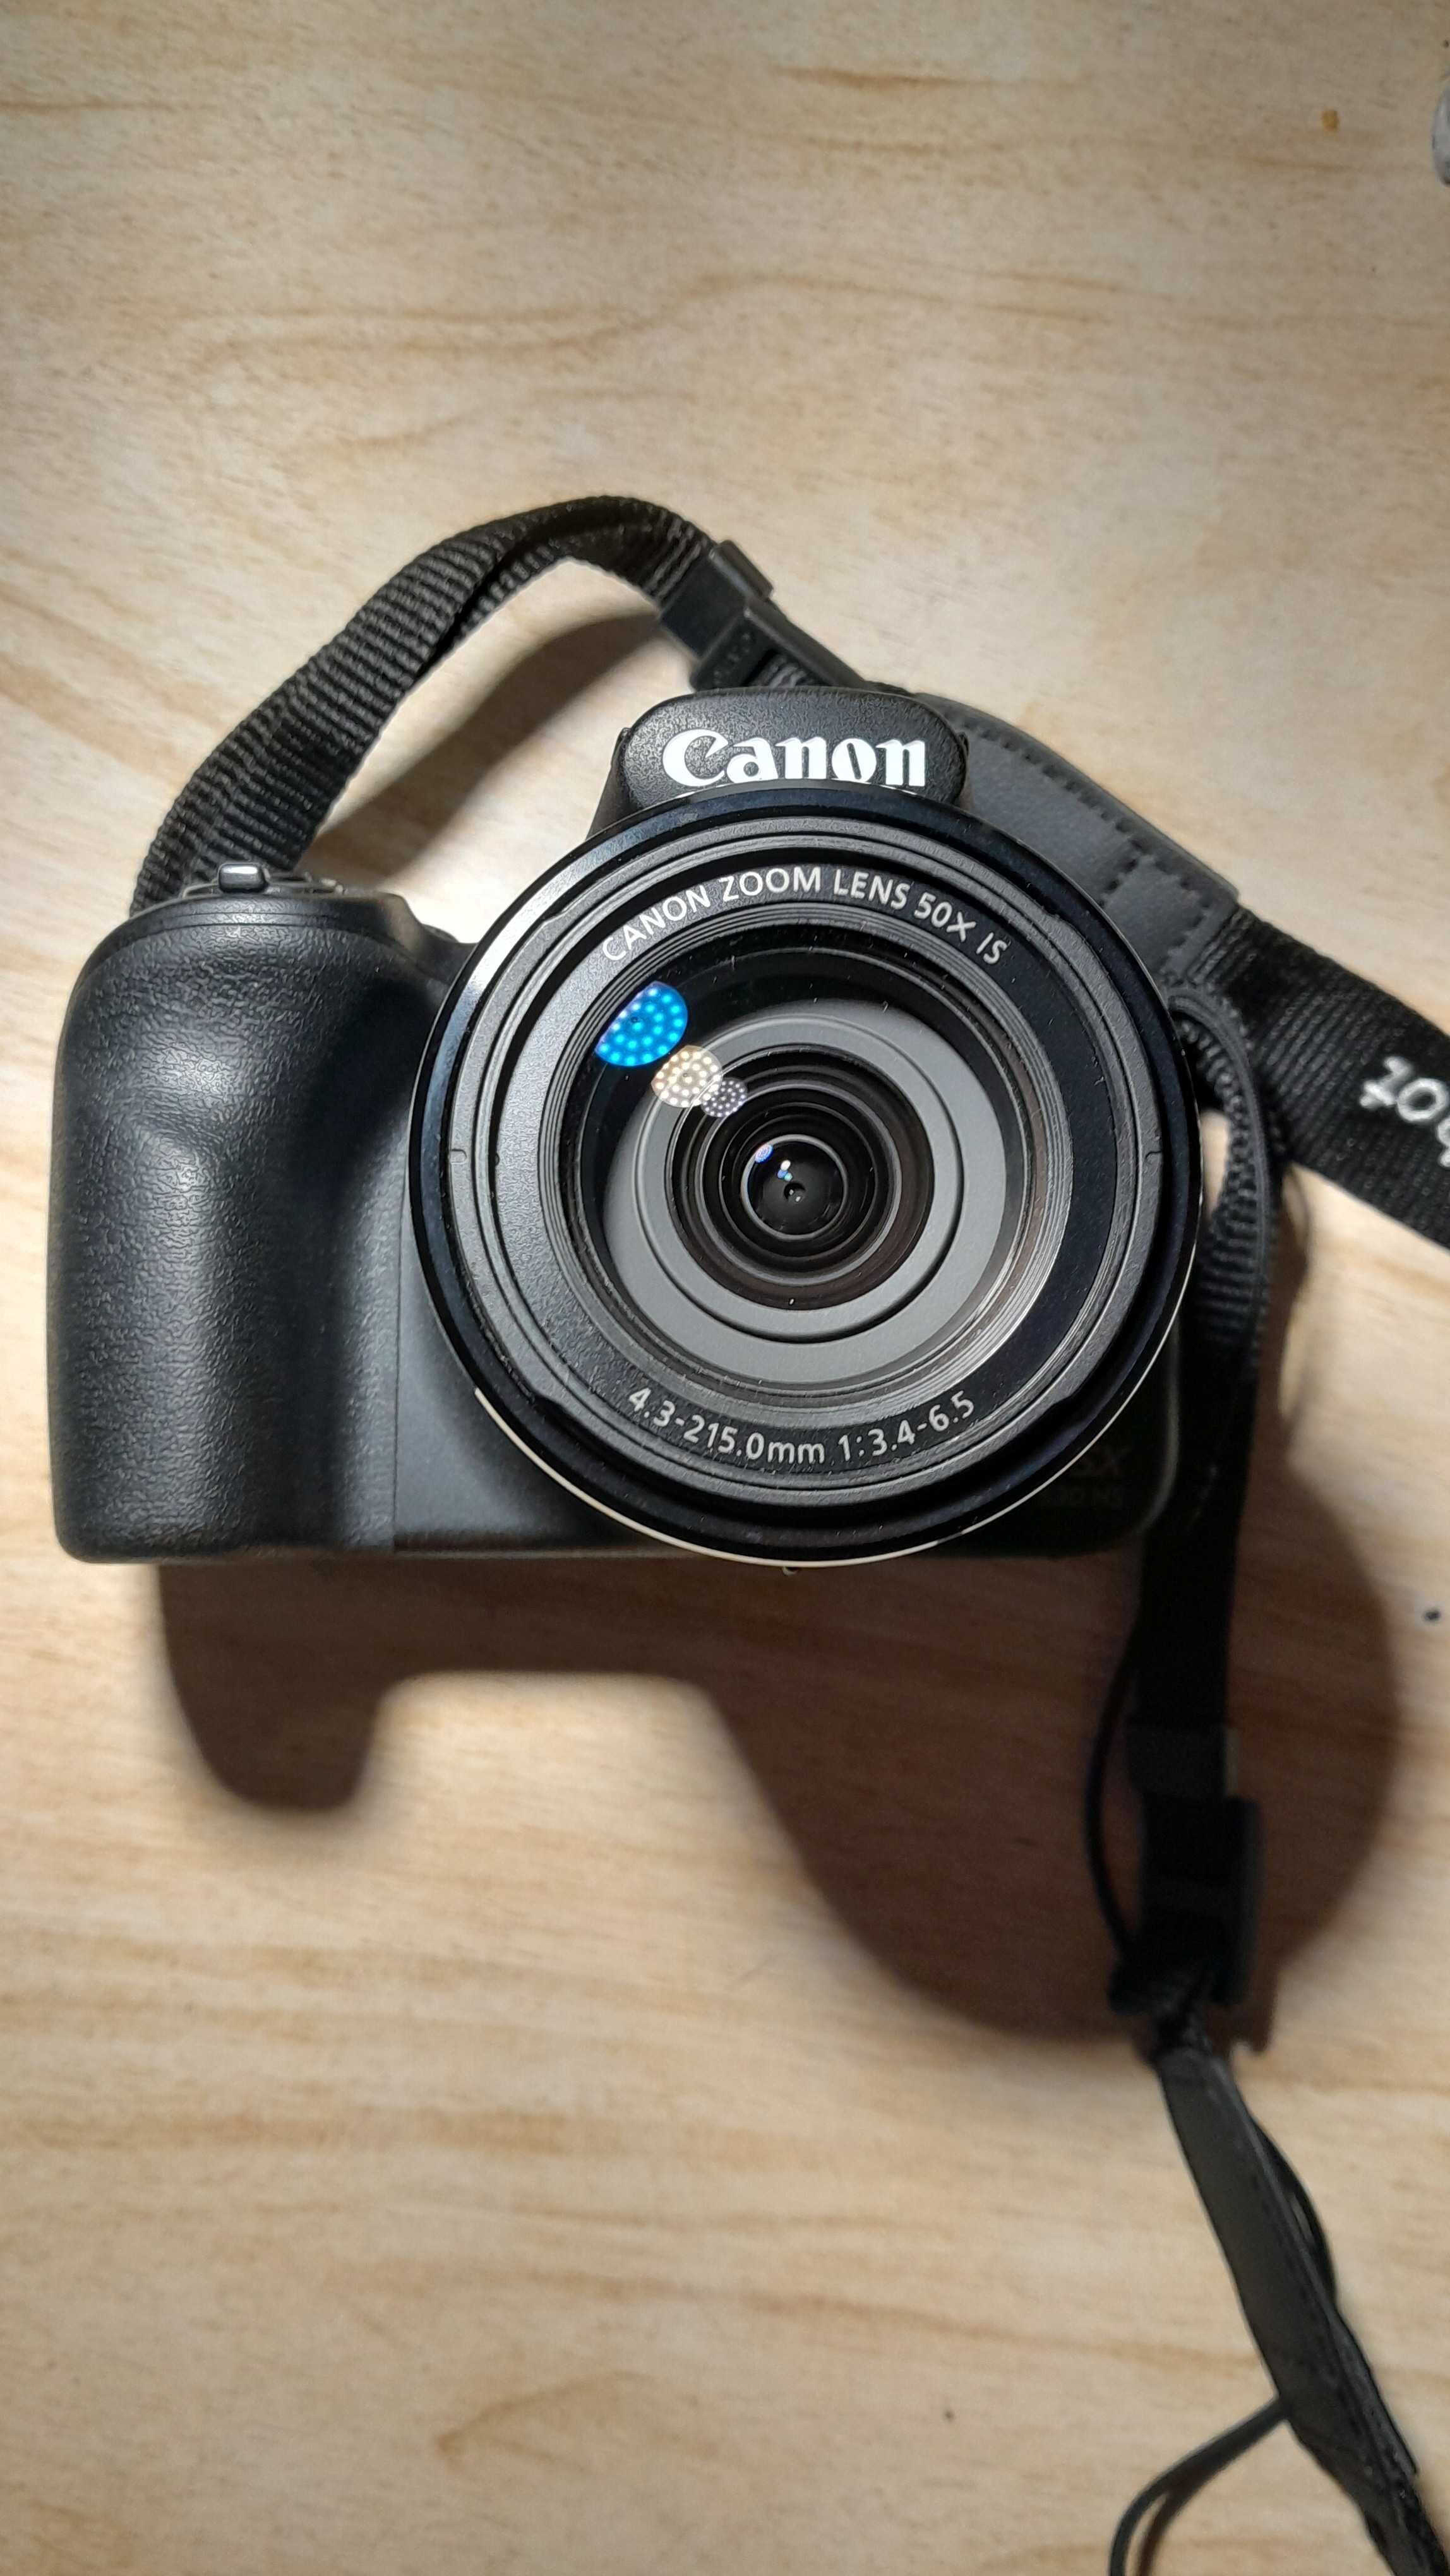 Фотоапарат Canon PowerShot SX530 HS